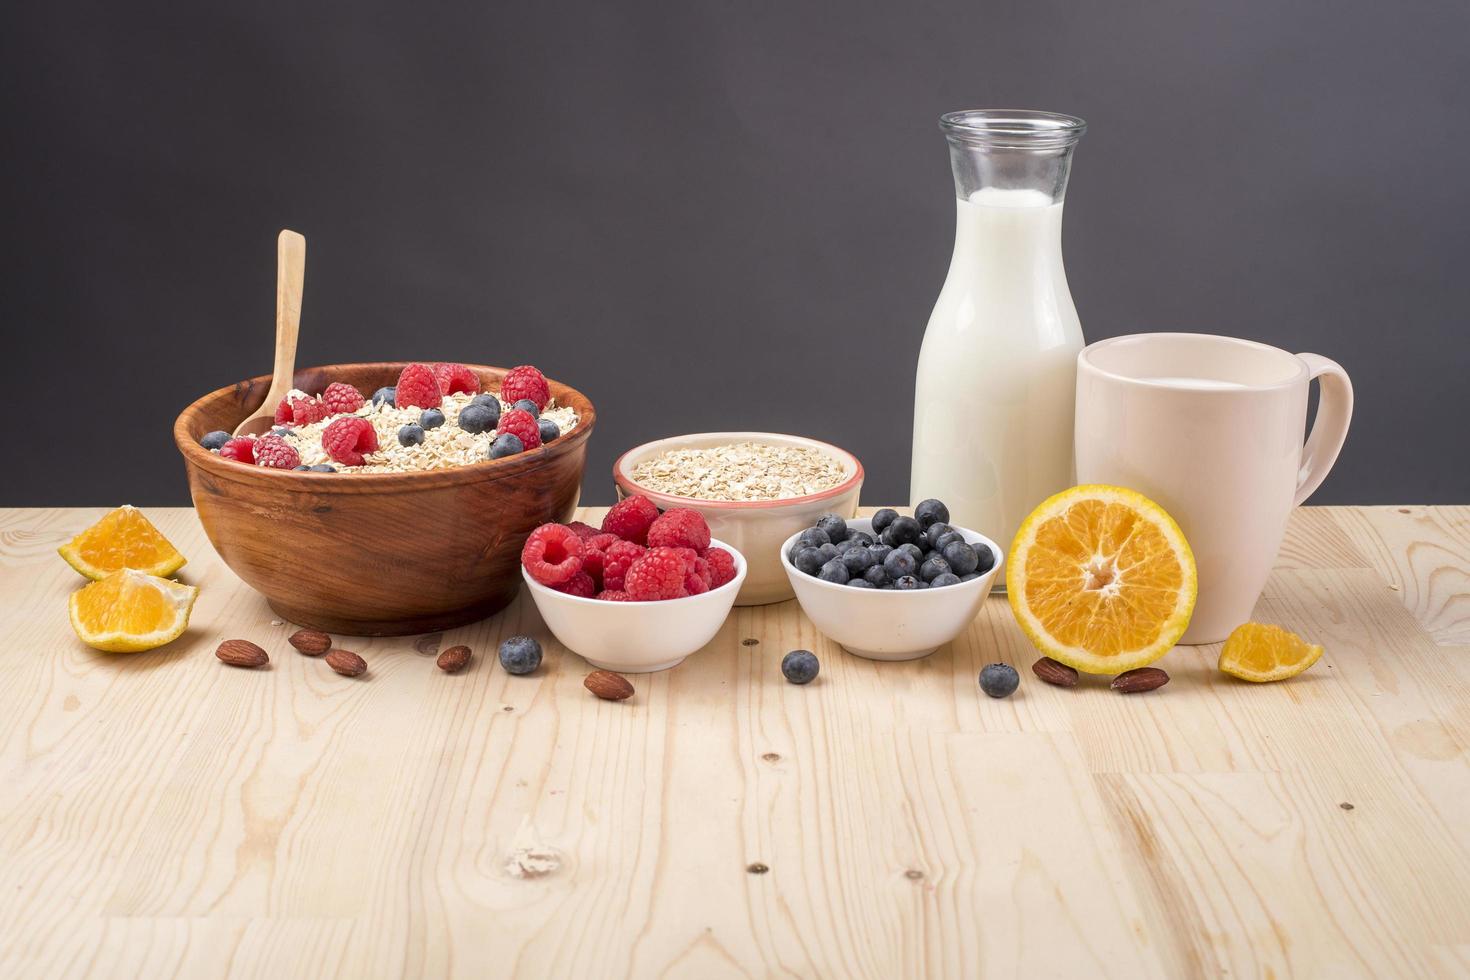 Healthy breakfast ingredients on wood table, Healthy food concept photo